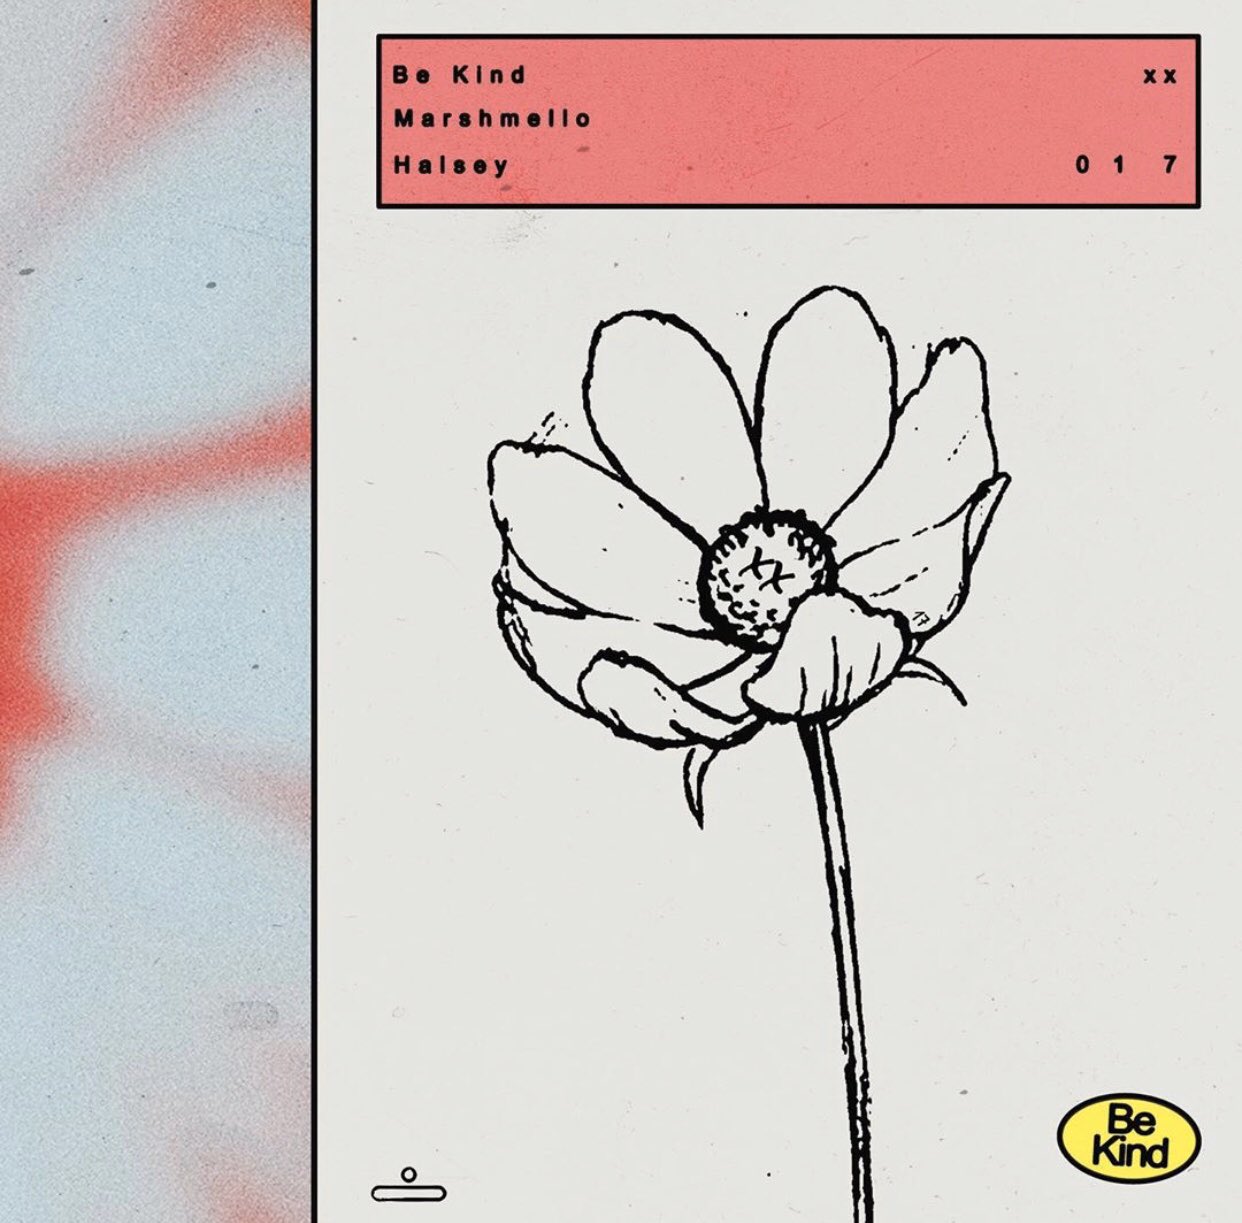 New Music: Halsey and Marshmello’s heartfelt new single ‘Be Kind’. Listen Here: - 2 MUGIBSON